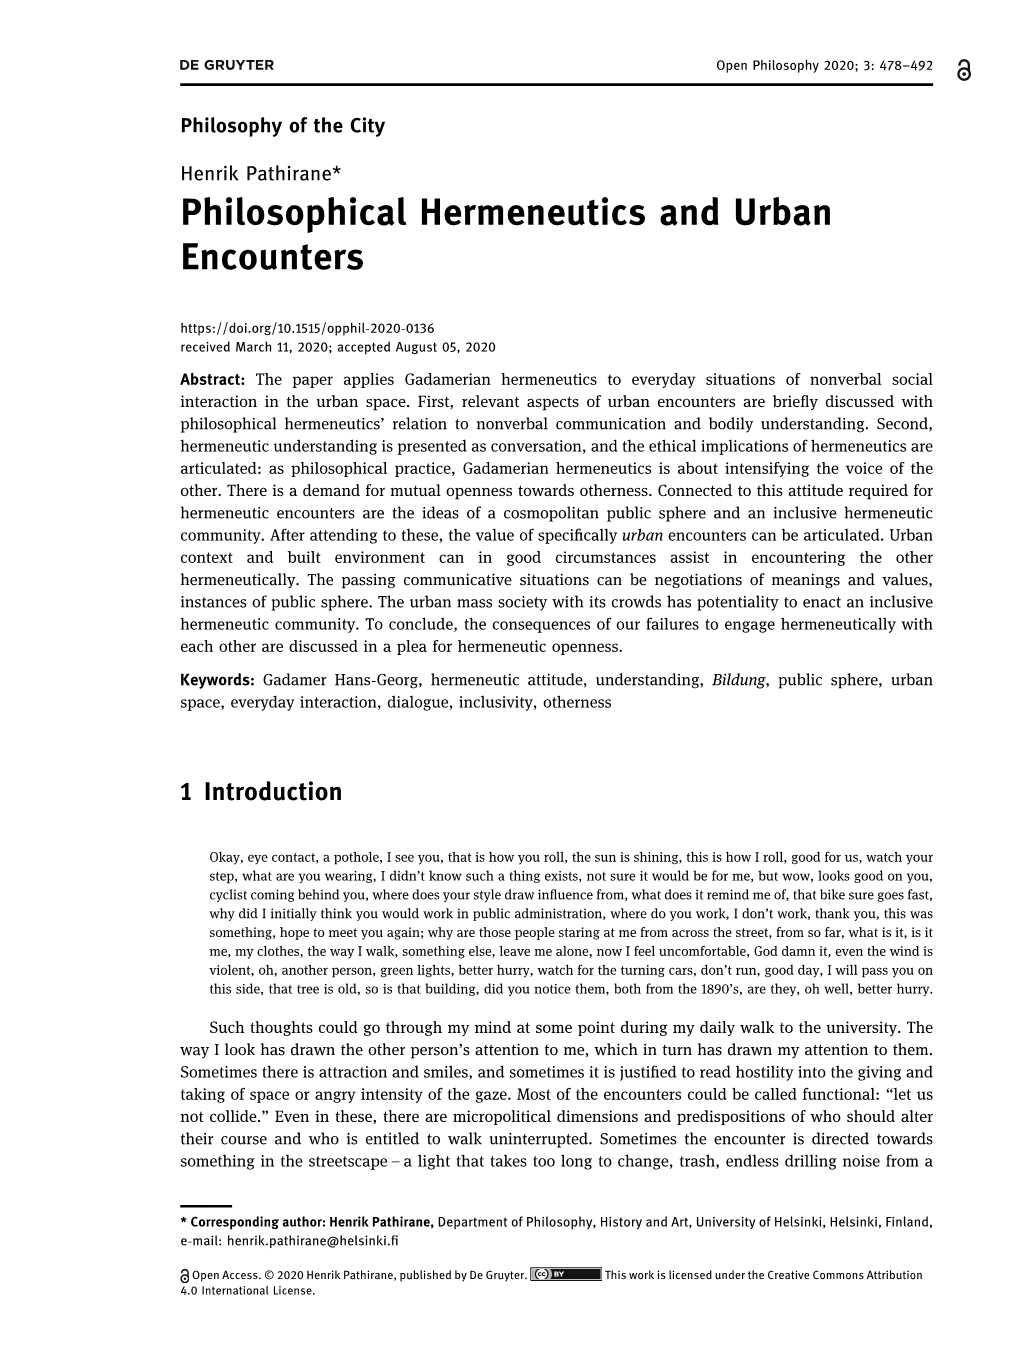 Philosophical Hermeneutics and Urban Encounters